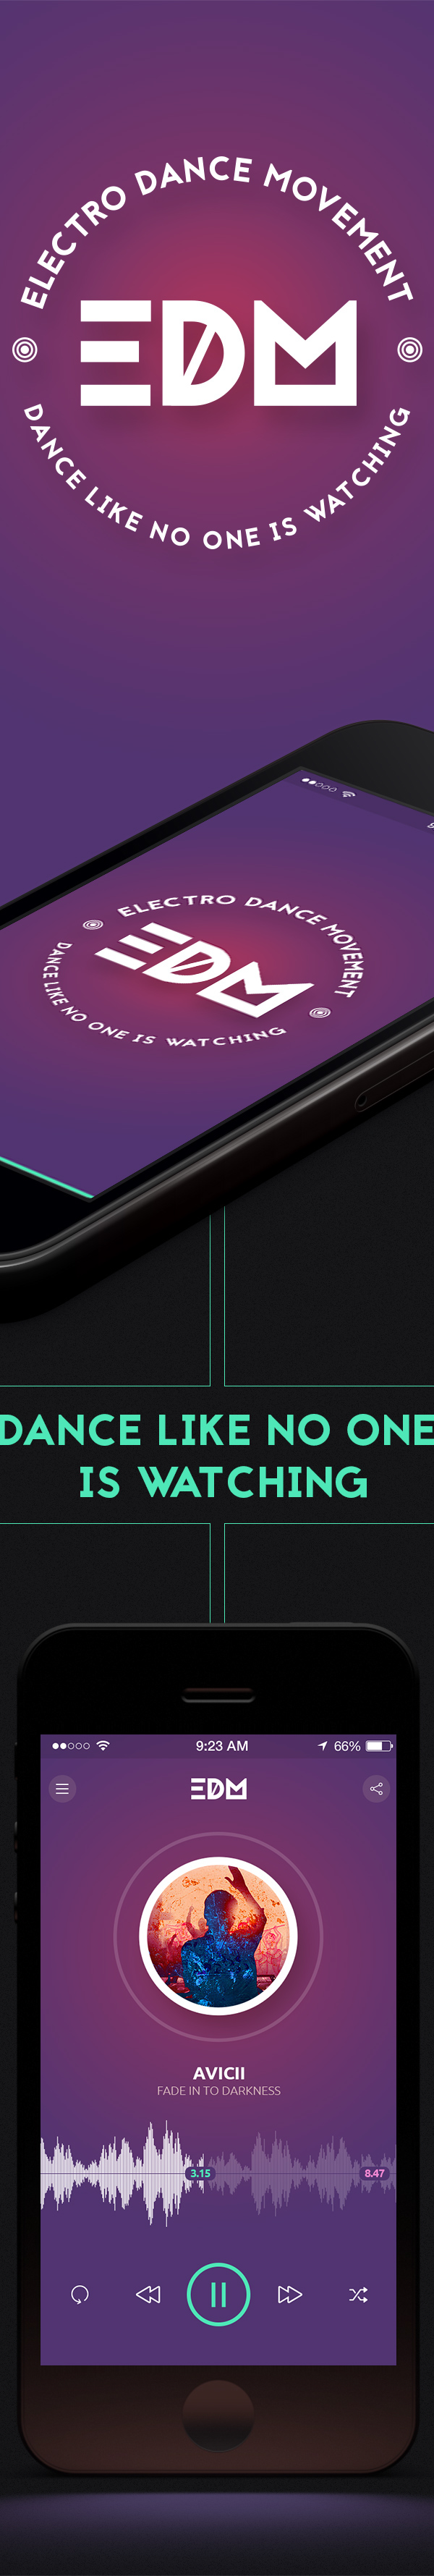 electro dance movement edm iphone app user interface user experience creative inspiration